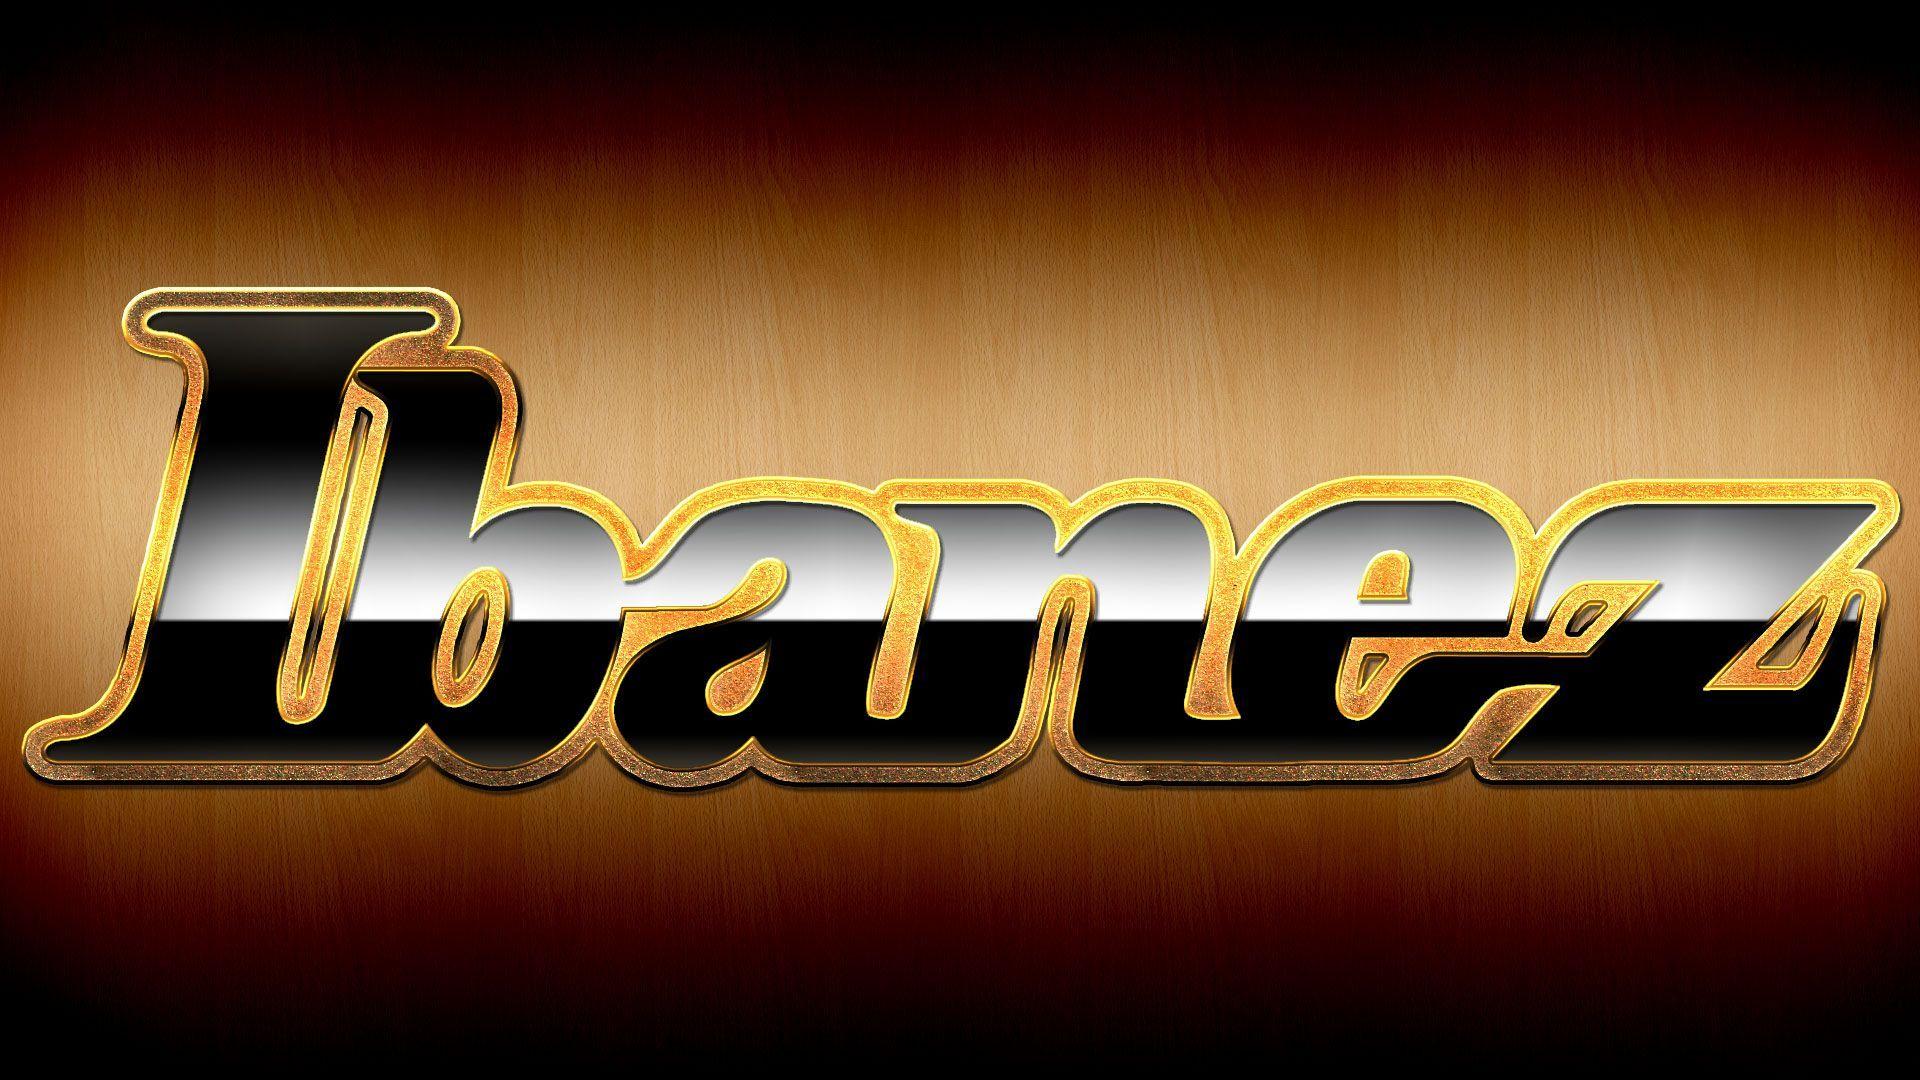 Ibanez Logo - Ibanez guitar logo | Ibanez Guitars in 2019 | Guitar, Guitar logo ...